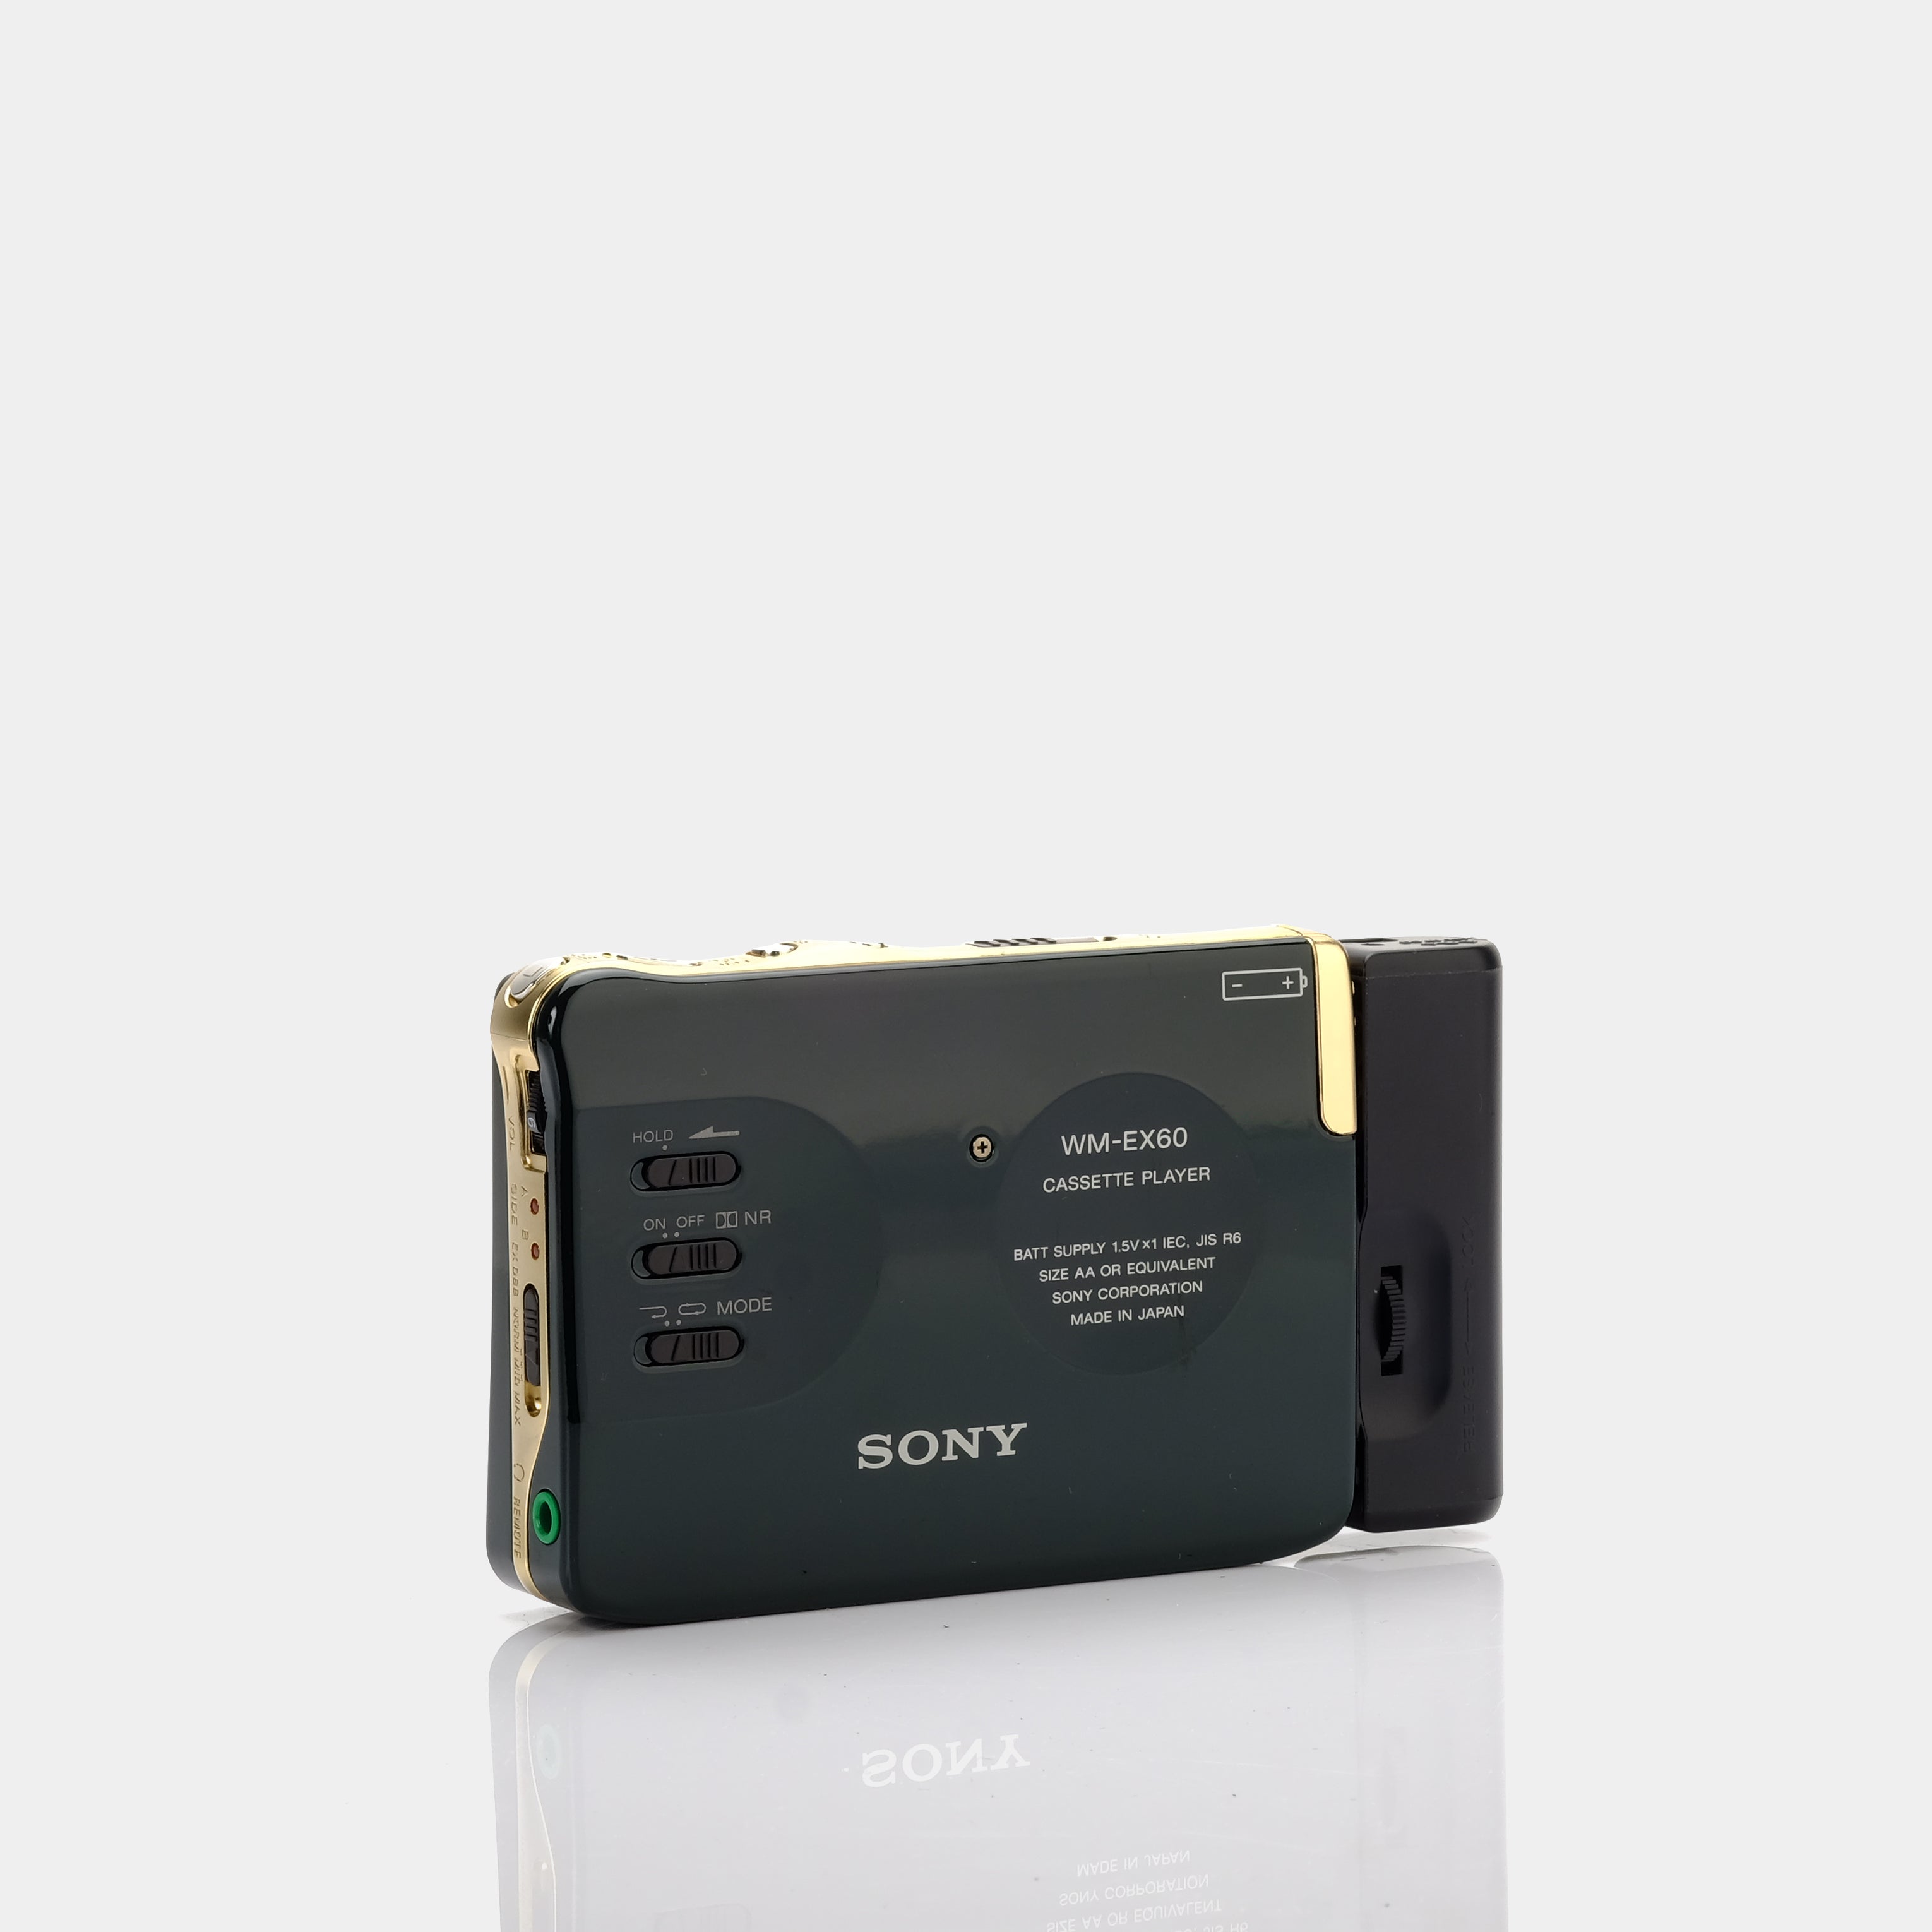 Sony Walkman WM-EX60 Green & Gold Portable Cassette Player